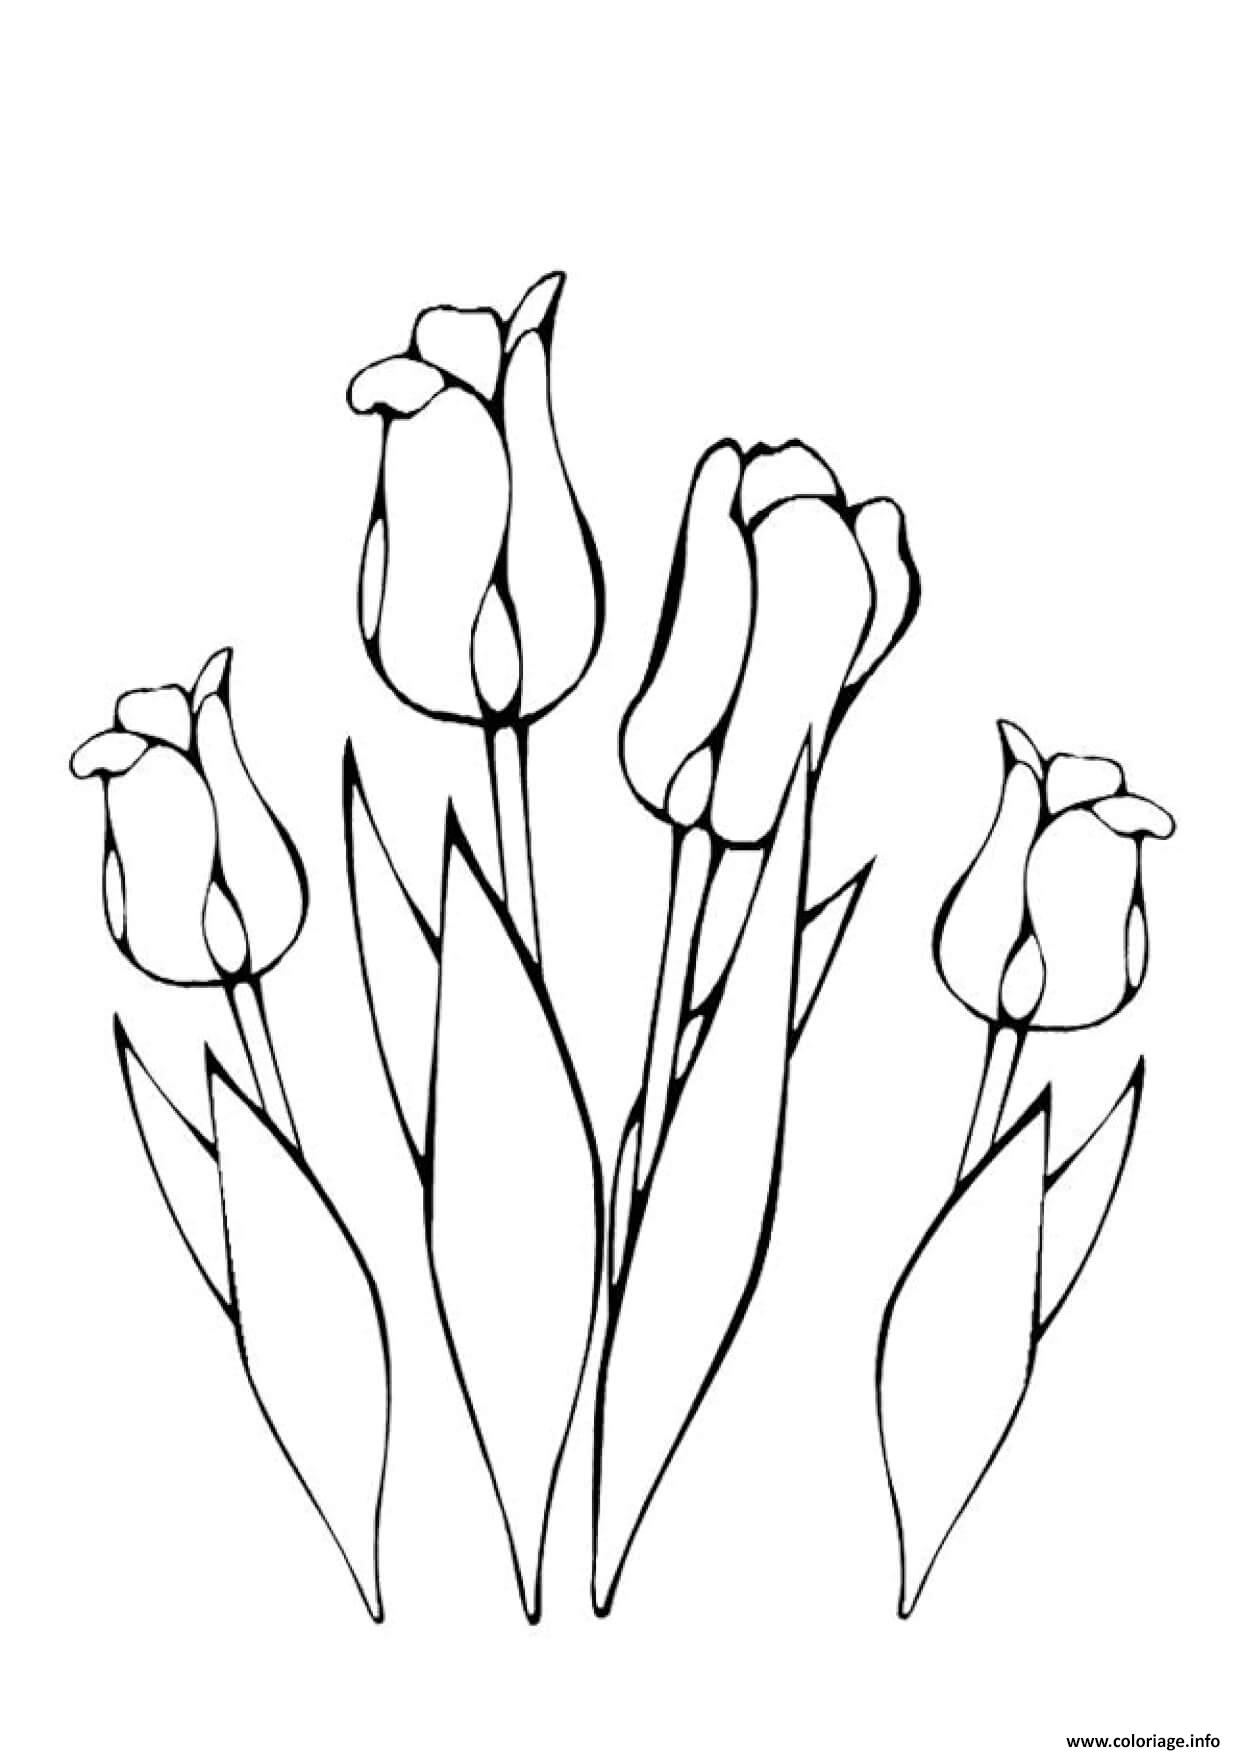 Dessin plusieurs fleurs tulipes greigii Coloriage Gratuit à Imprimer